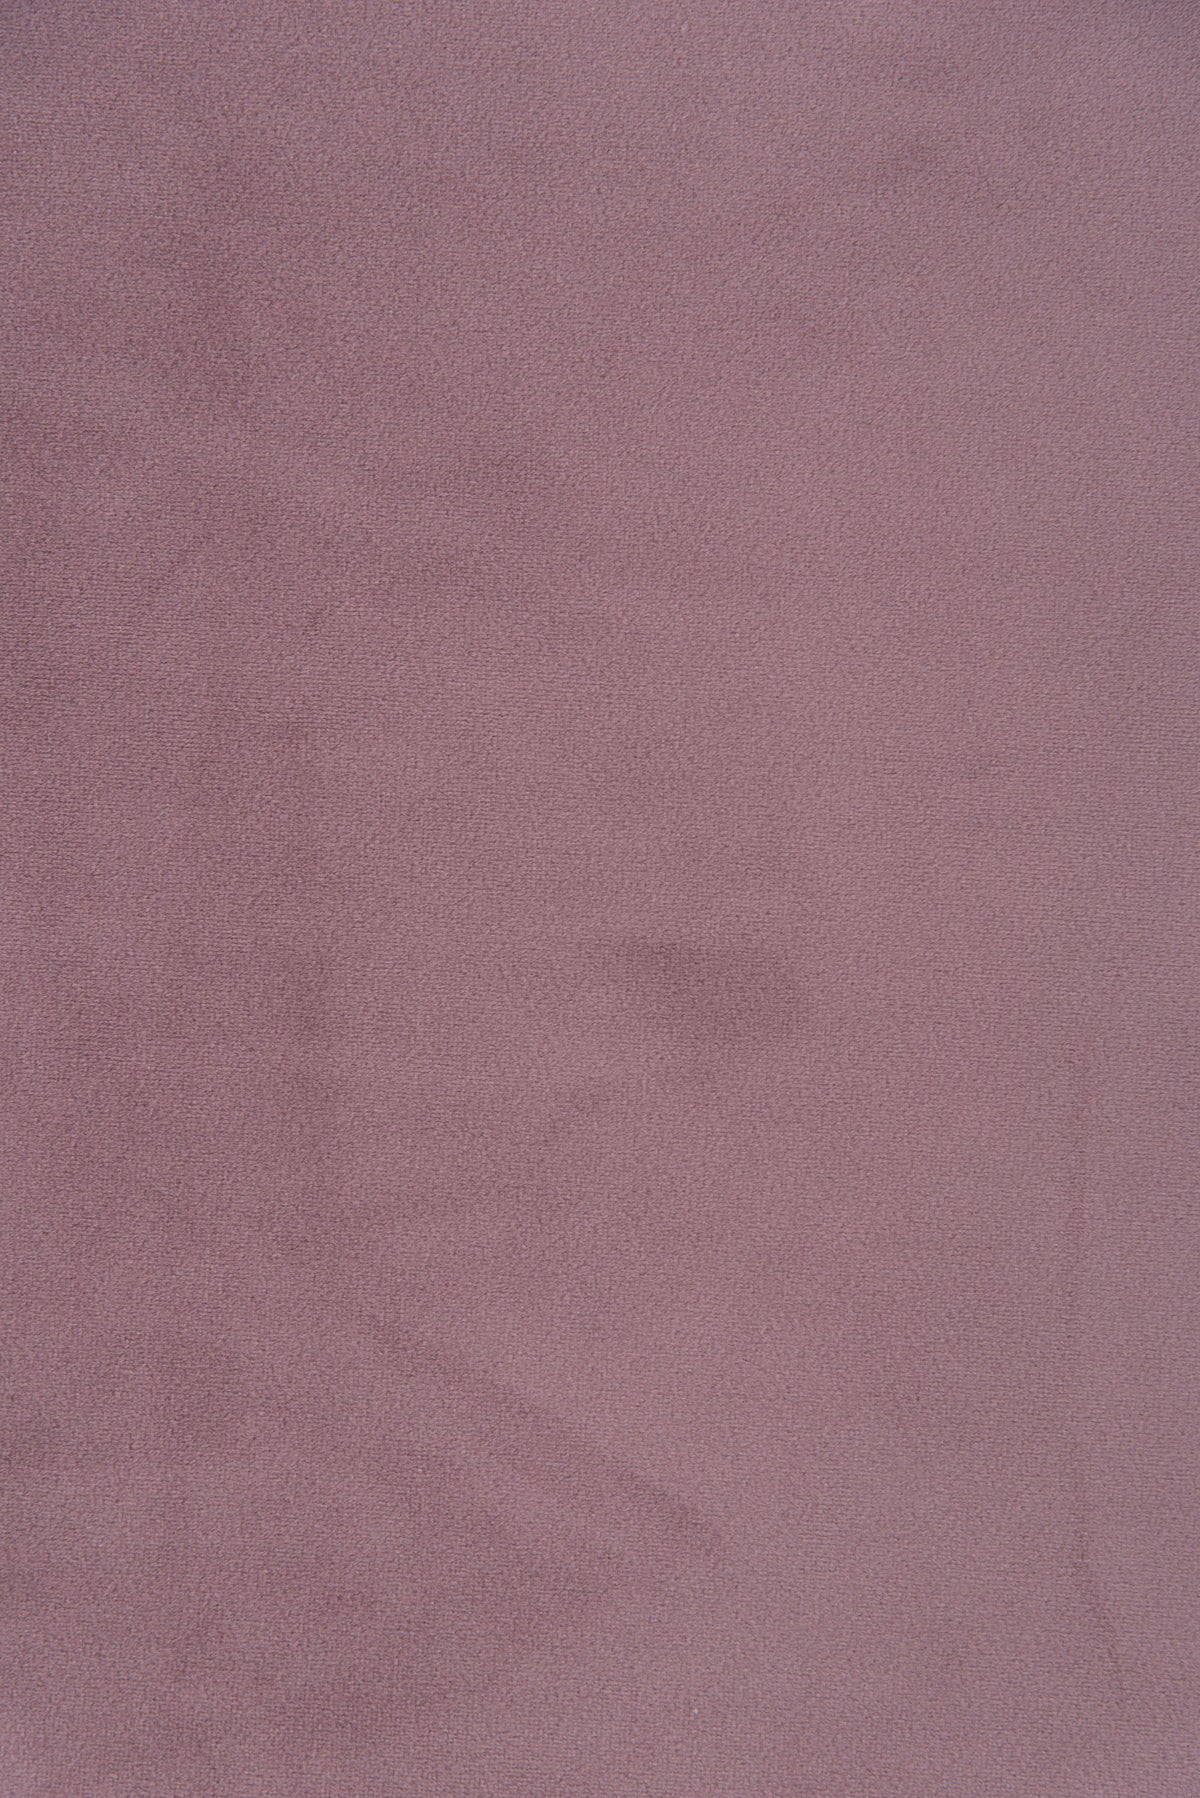 Velvet Paradise Ancient Pink 1483358-01